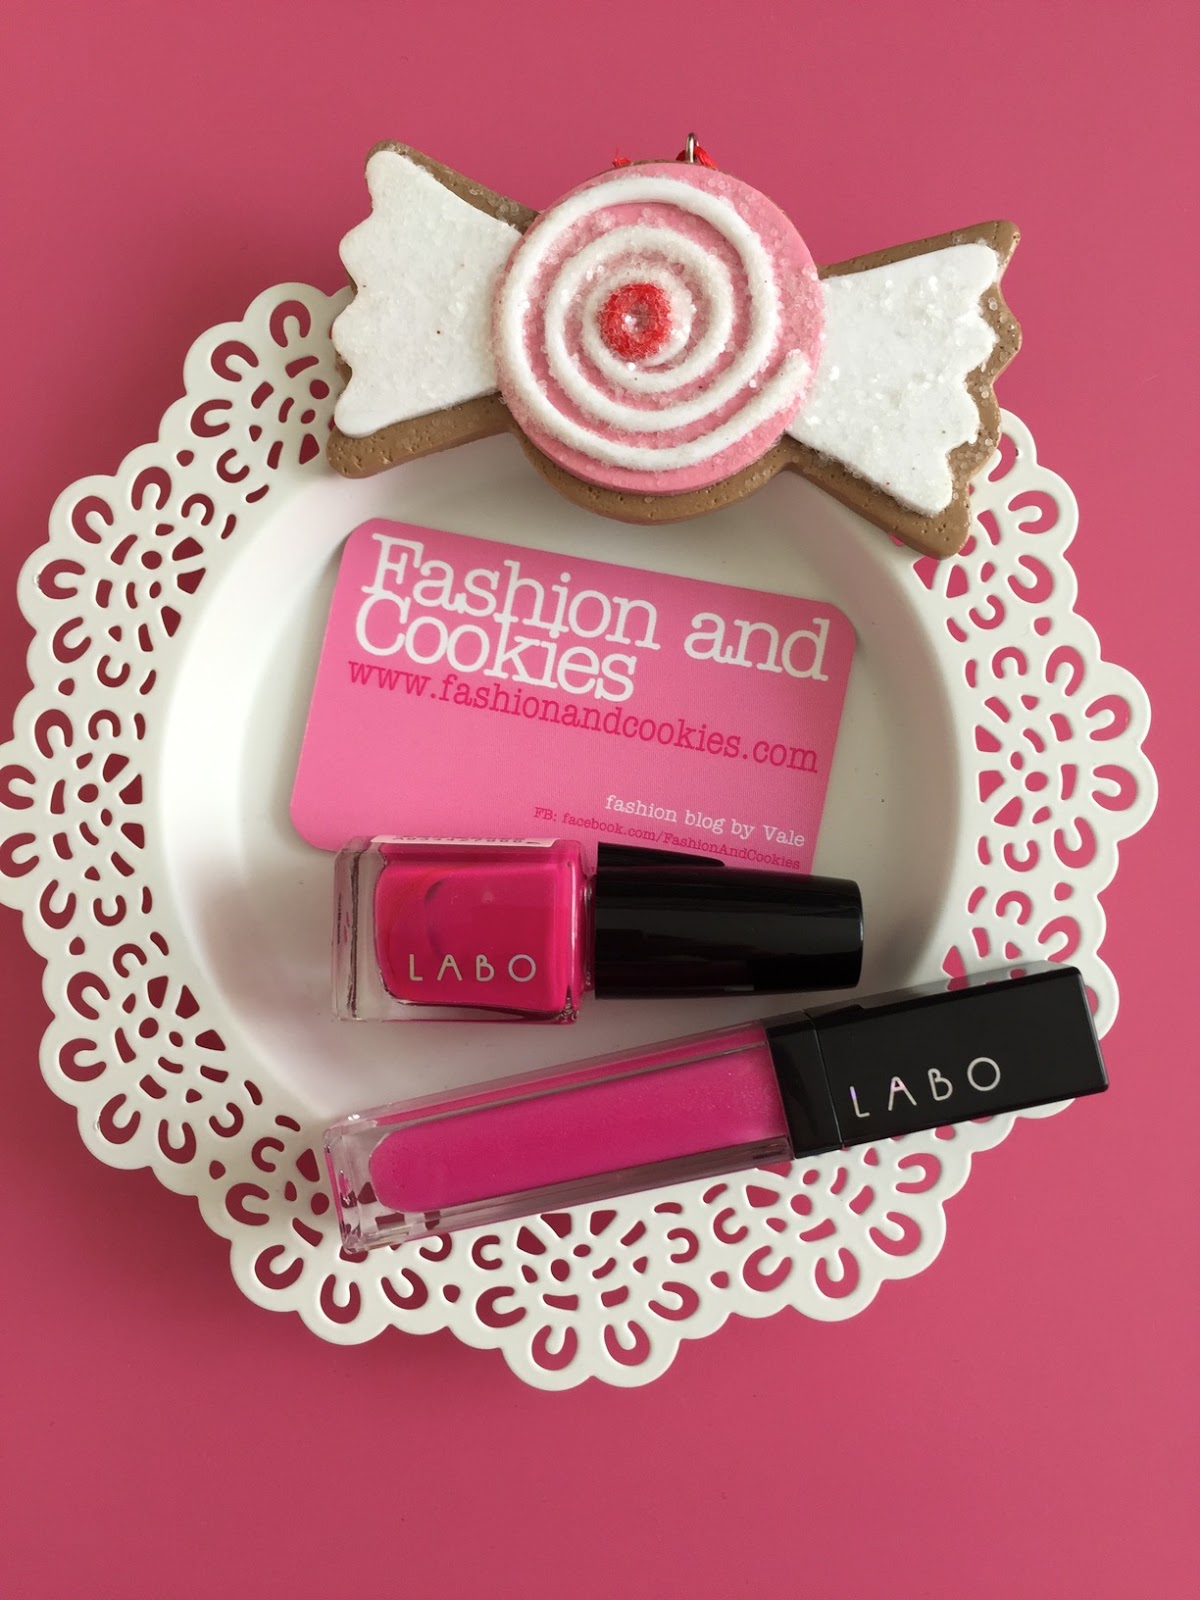 Labo Make-Up Led pink gloss and nail polish on Fashion and Cookies fashion and beauty blog, fashion and beauty blogger